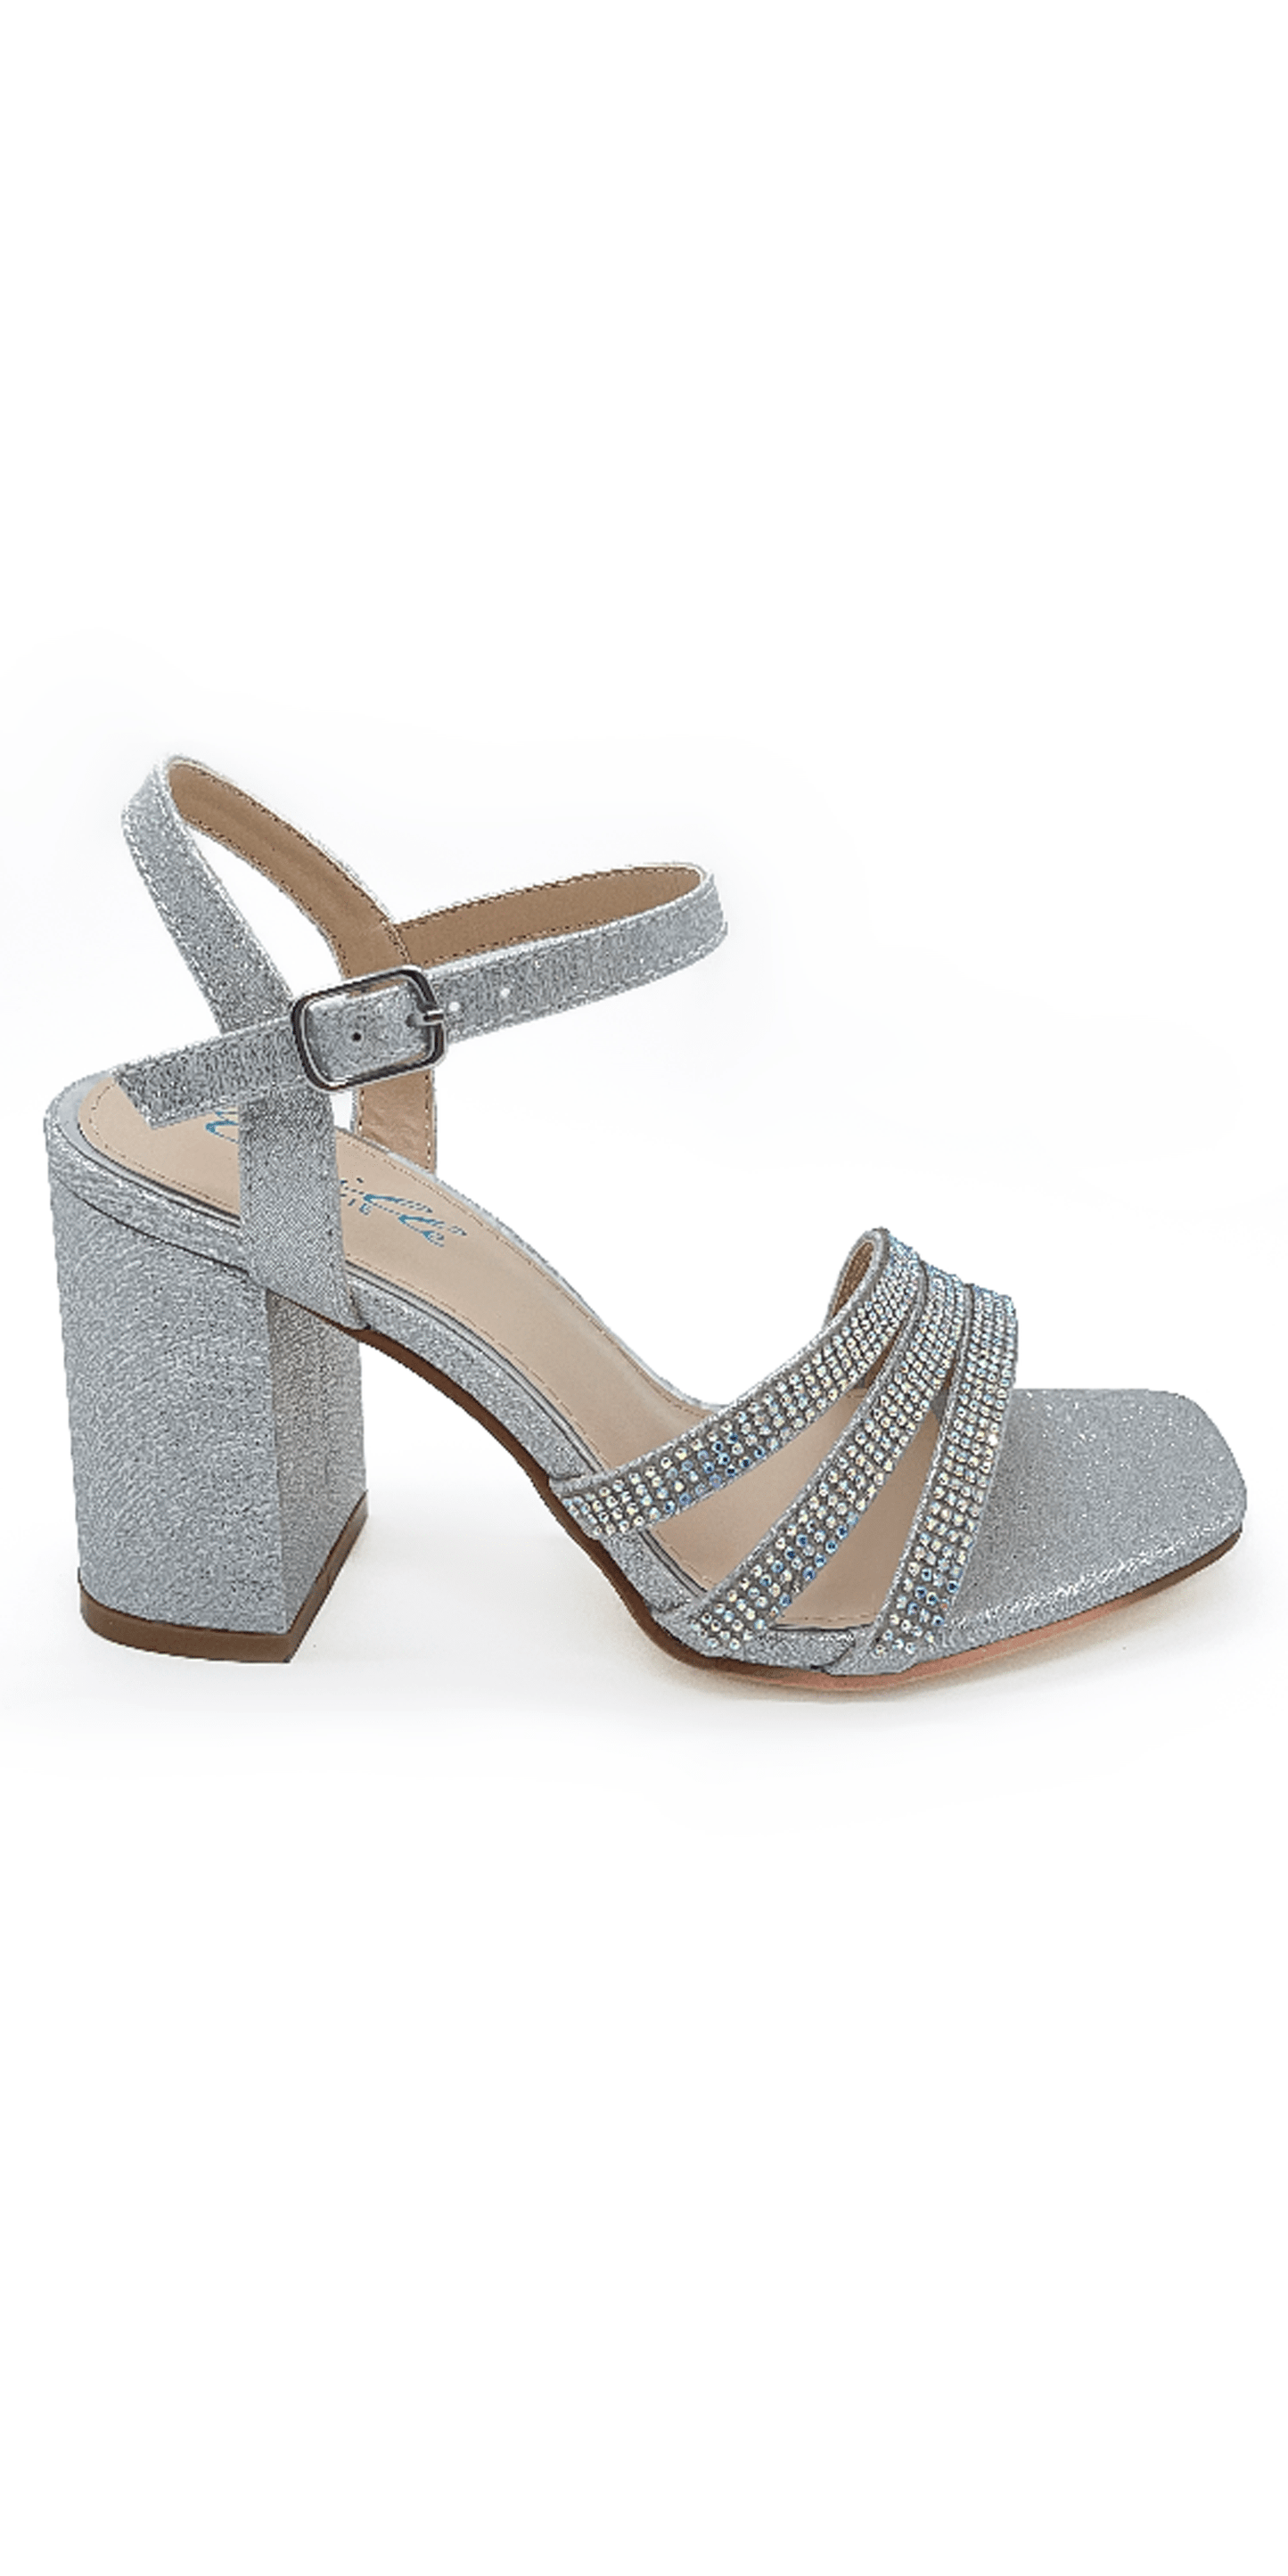 Camille La Vie Rhinestone Strappy Block Heel Glitter Sandal